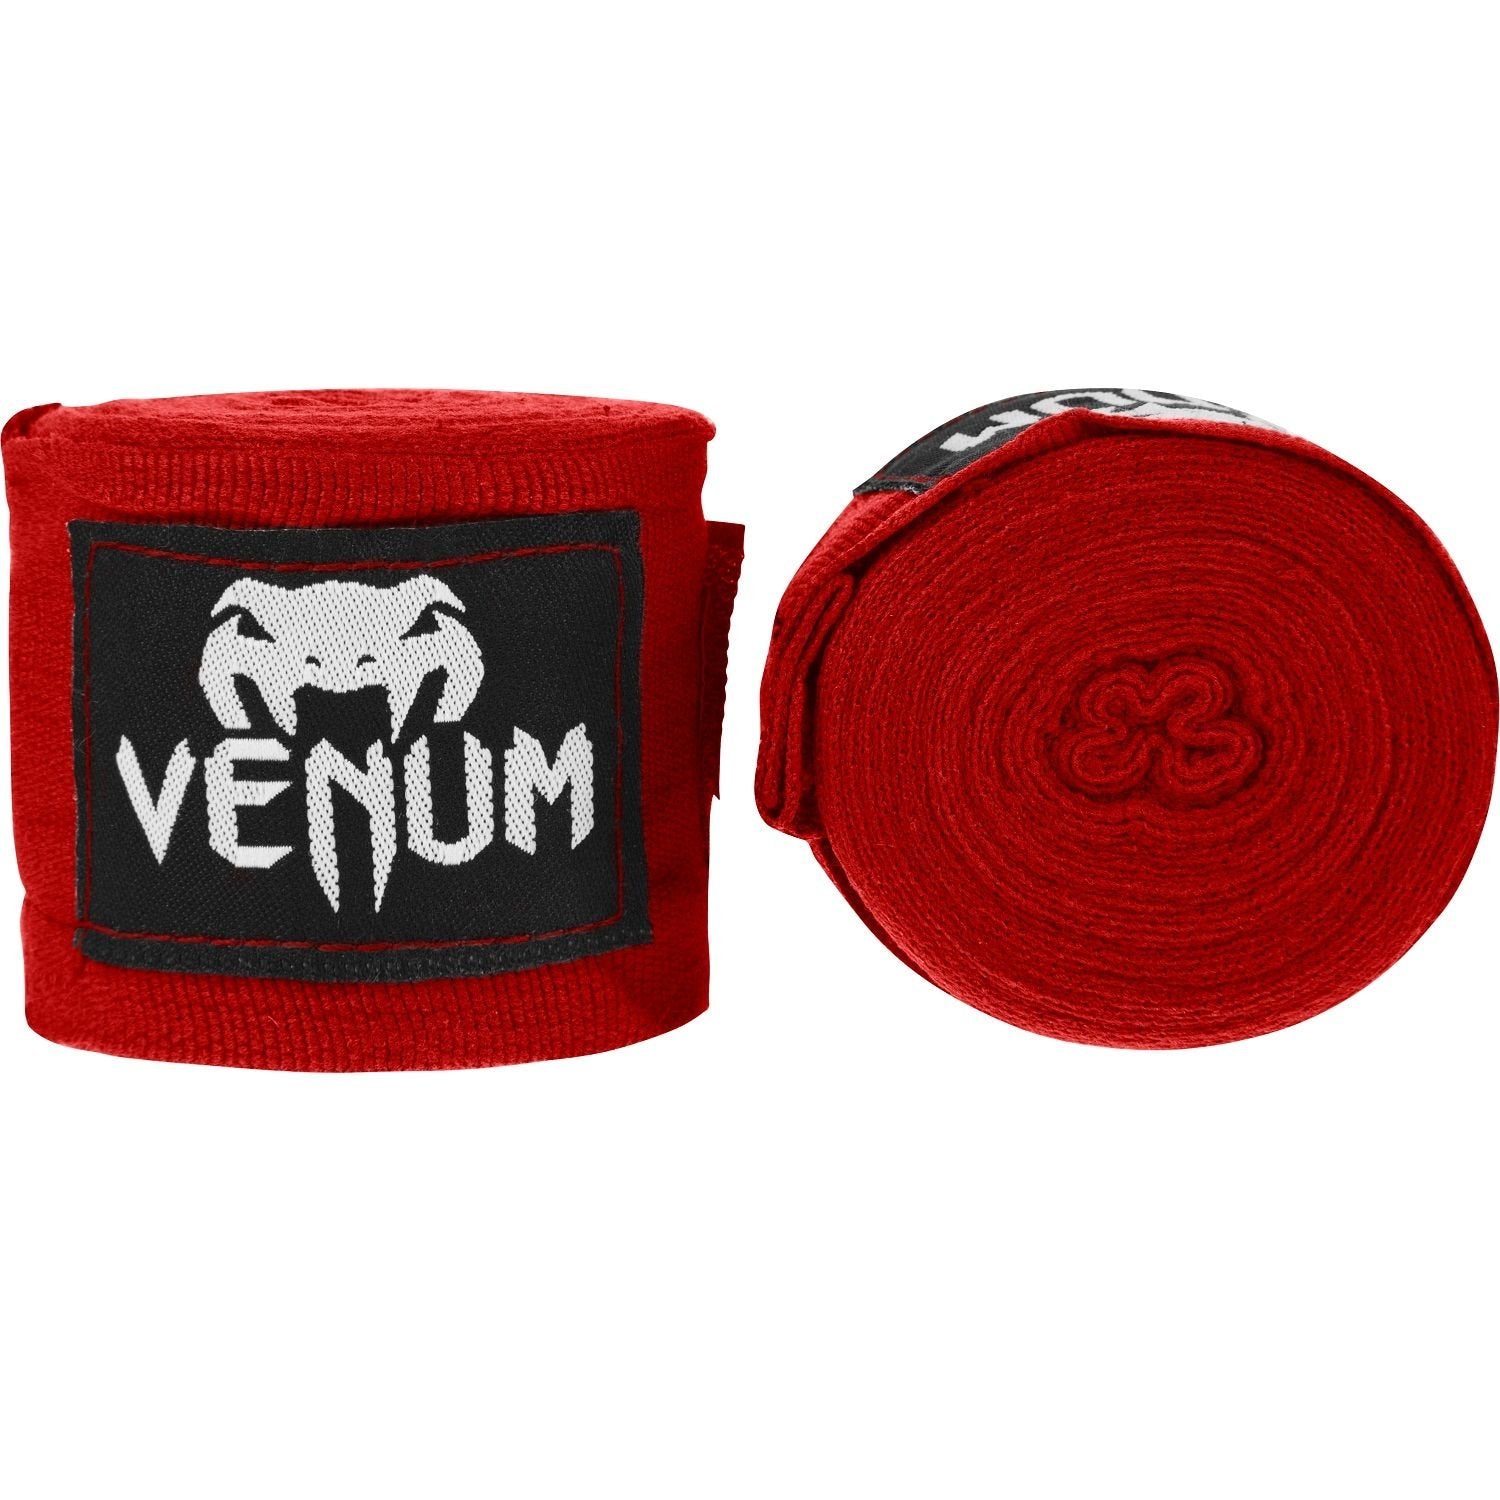 Venum Kontact Boxing Hand Wraps, 4 Mtrs - Red - Best Price online Prokicksports.com